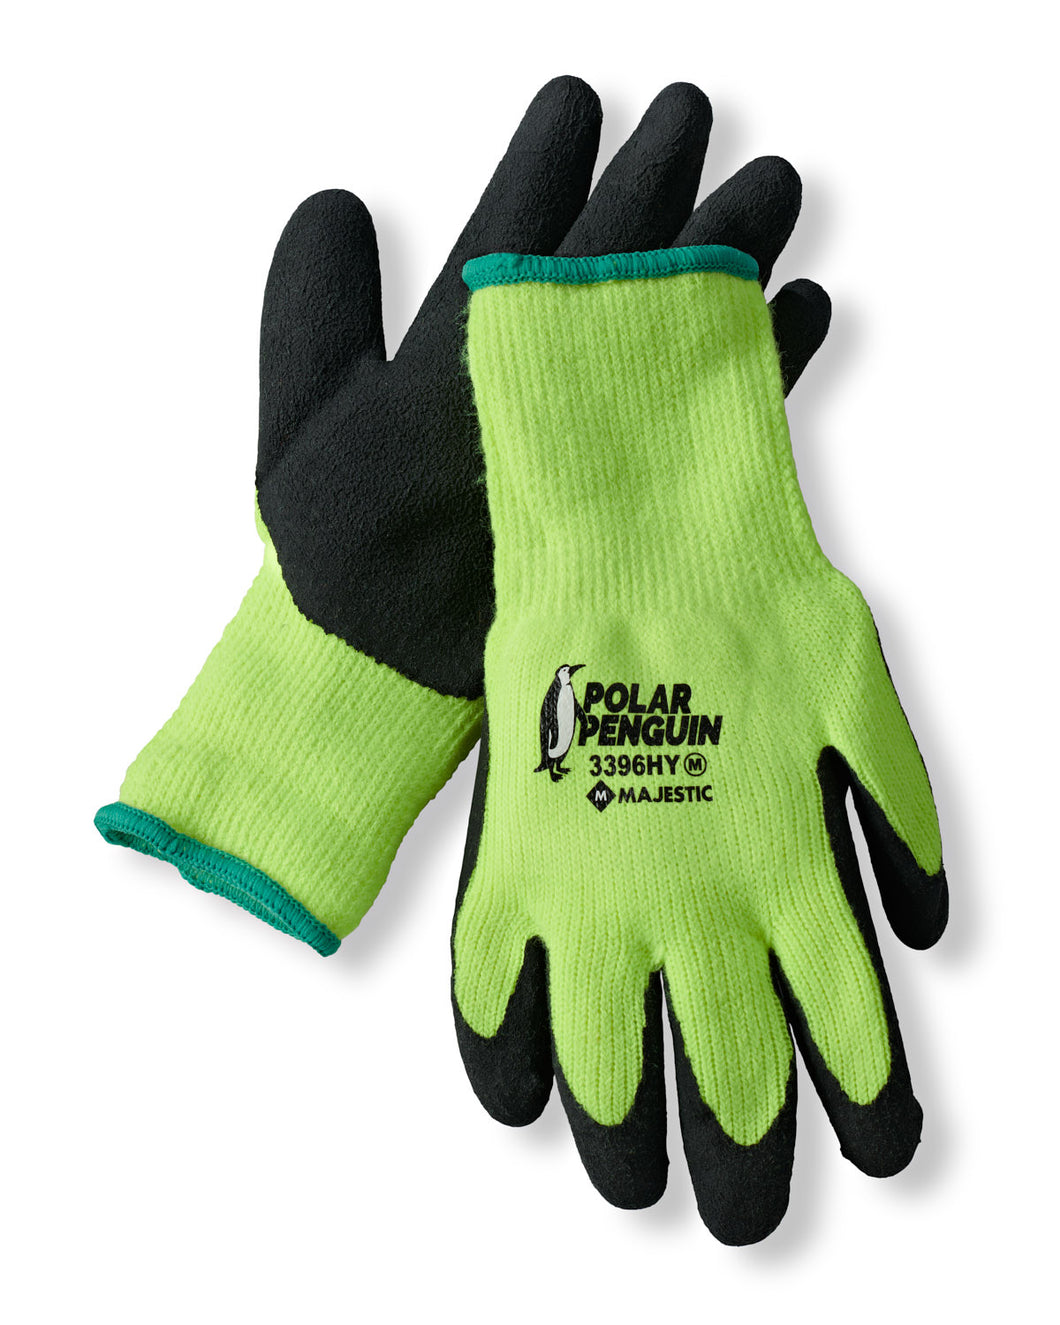 Polar Penguin Thermal Grip Work Gloves Yellow 12 Pair Pack